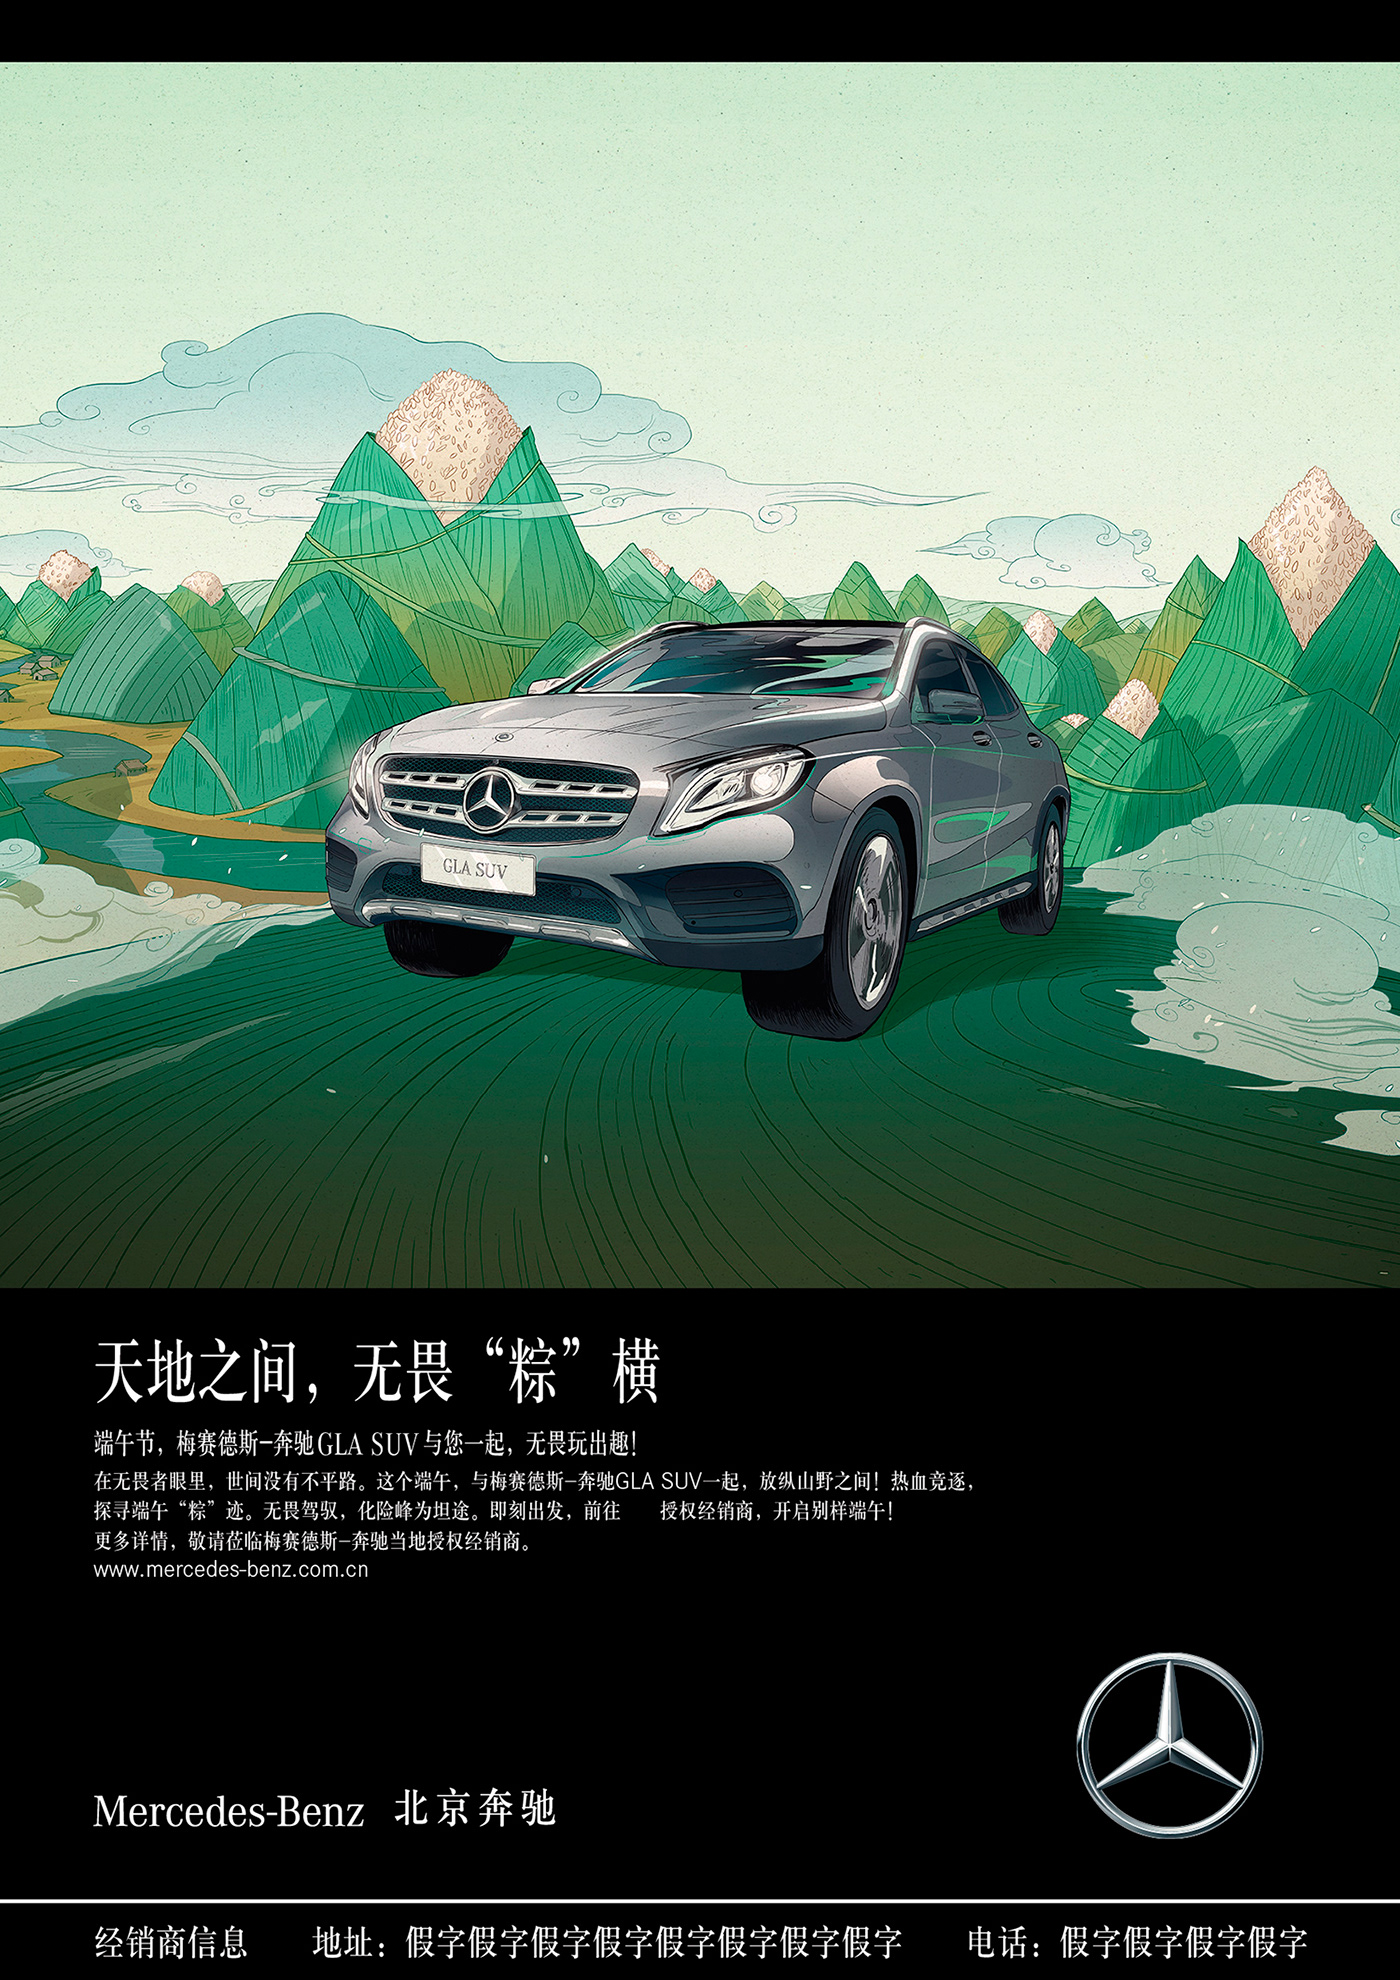 mercedes Benz mercedes-benz car china GLA SUV Rice mountain colored elegant